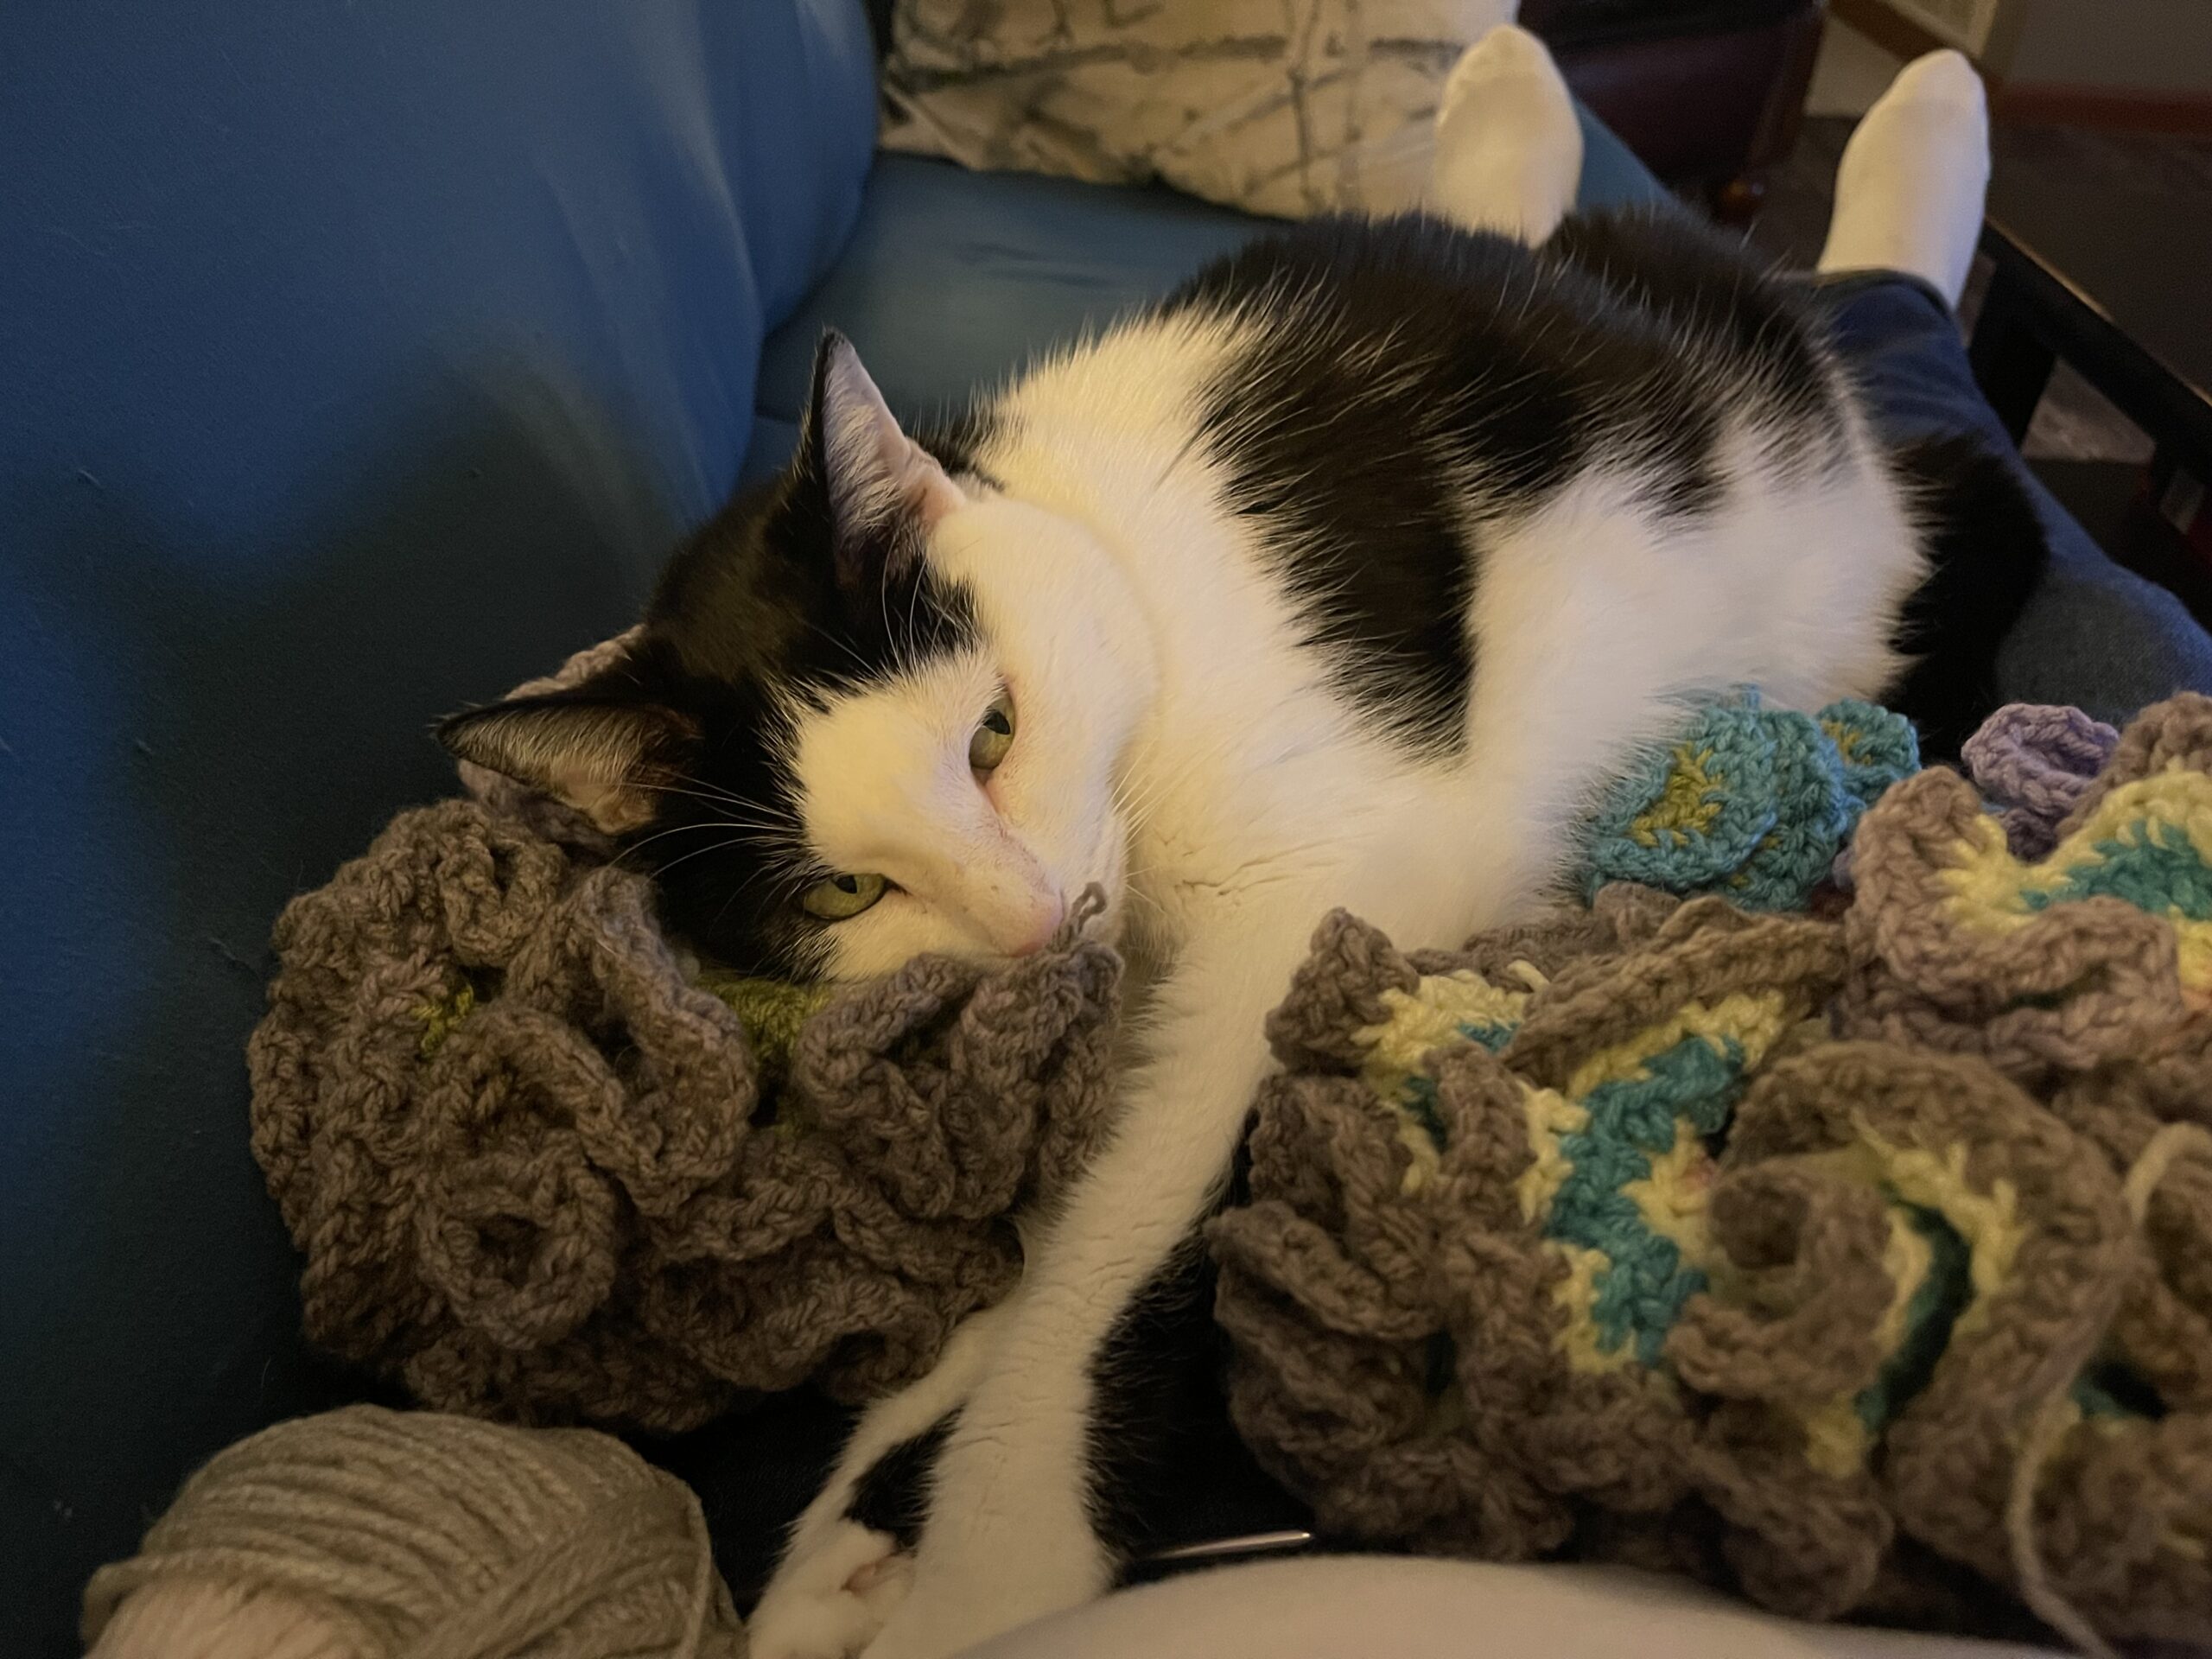 Oreo relaxing on the blanket I'm crocheting